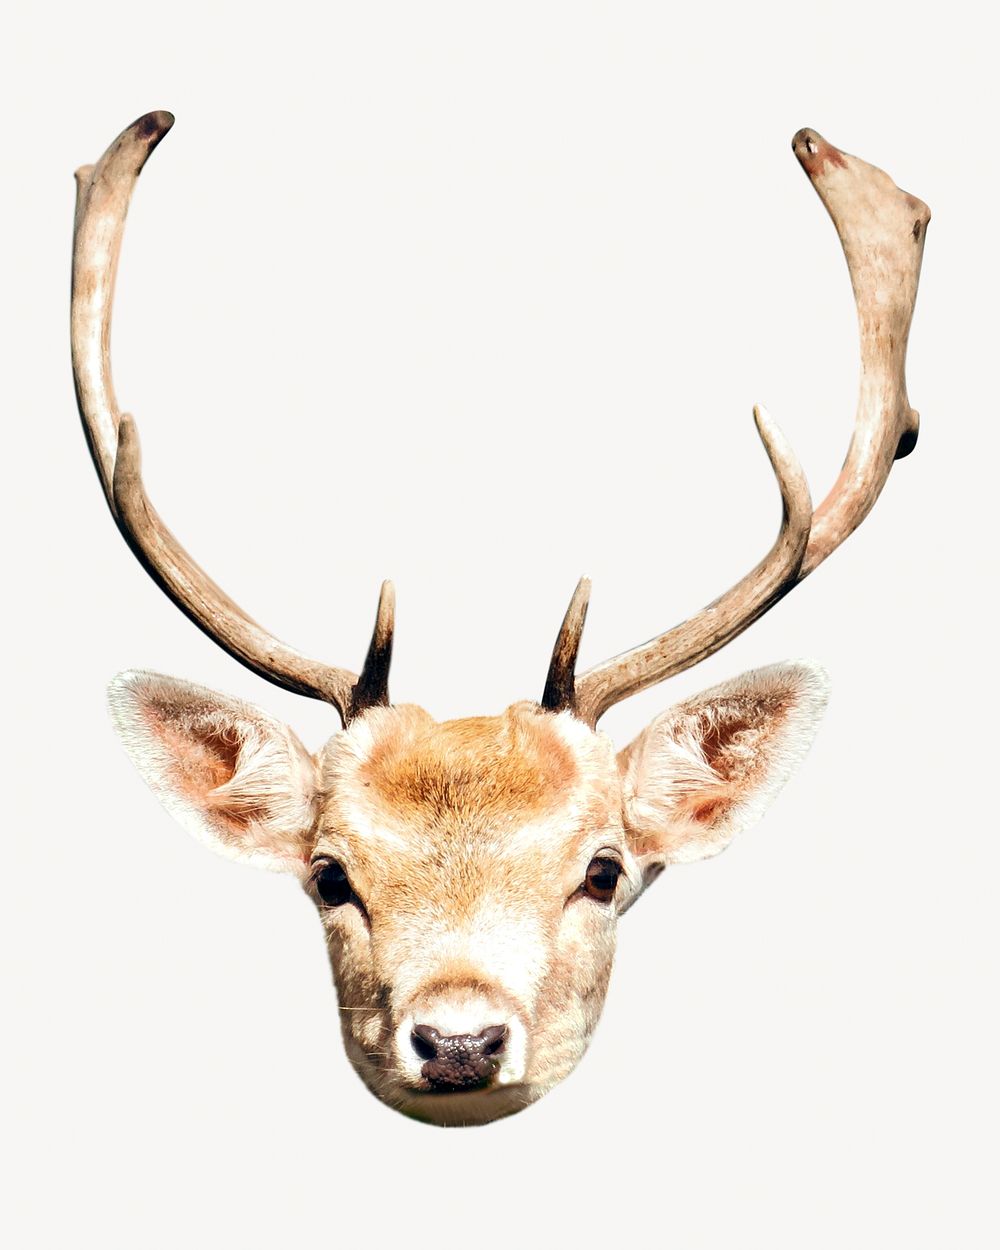 Deer, wildlife isolated image